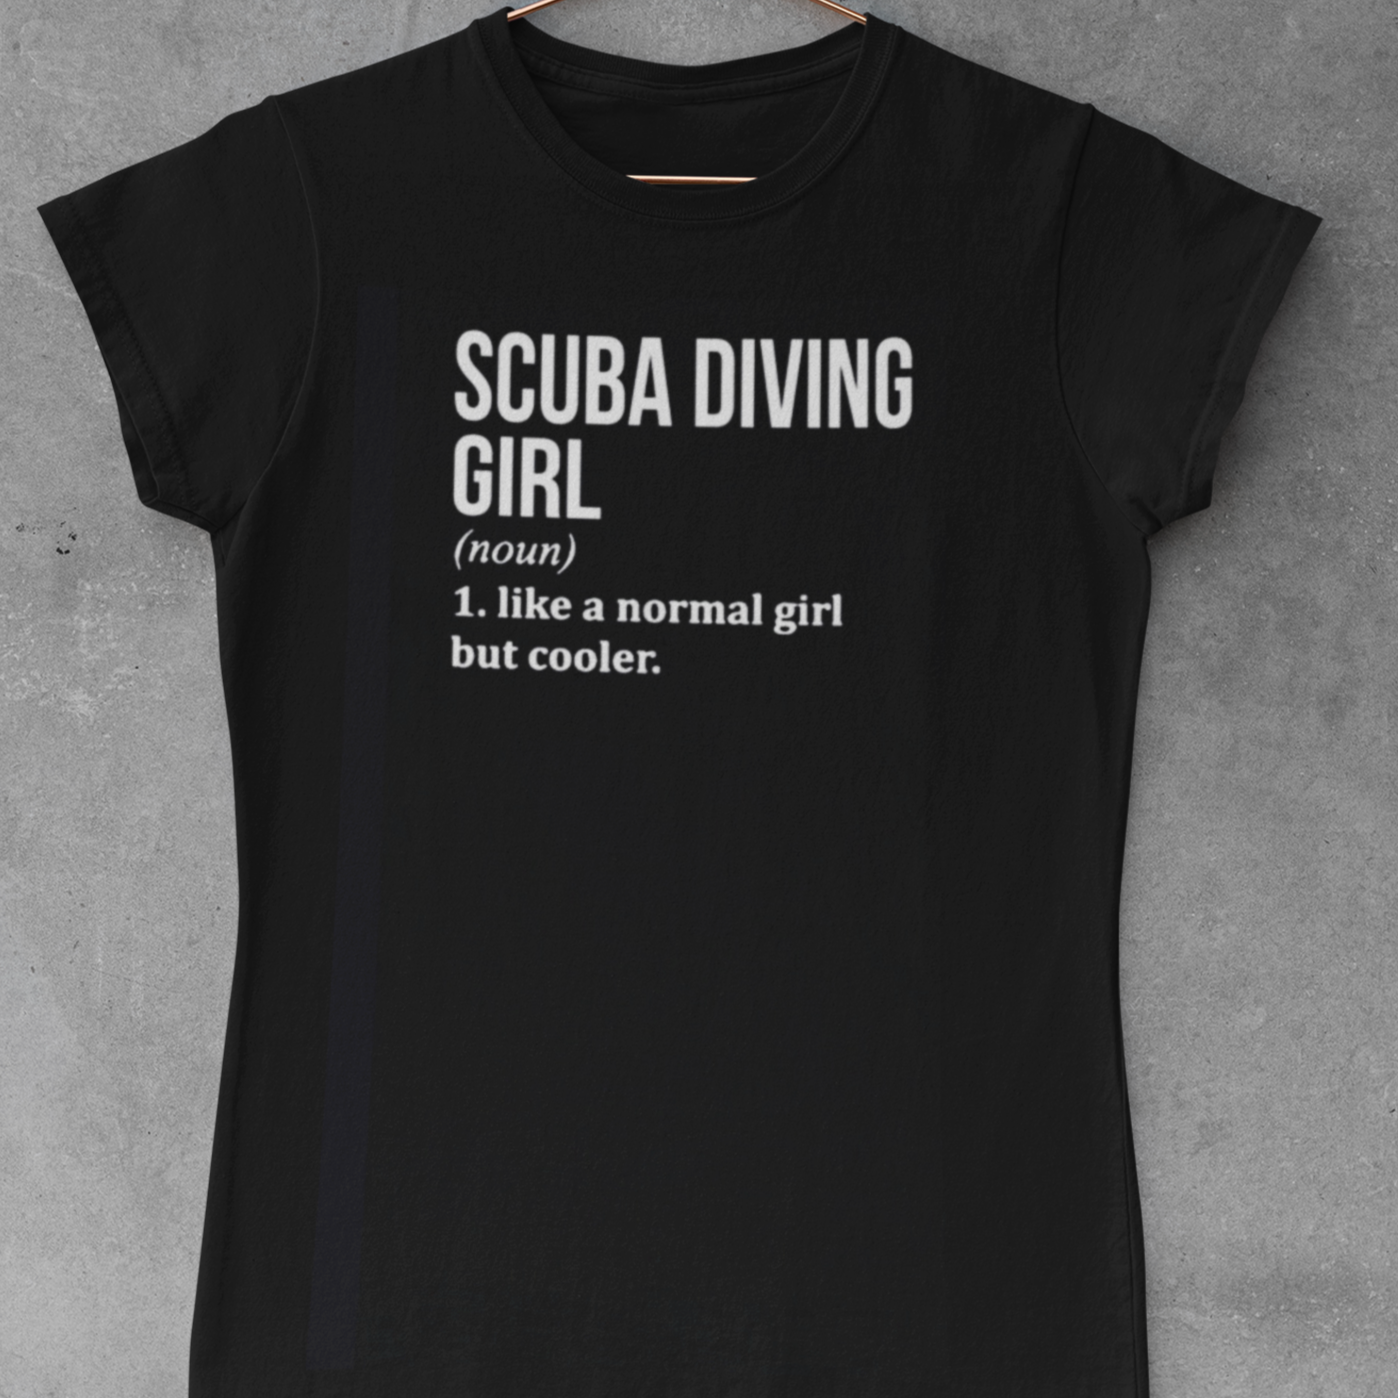 black Scuba diving T-Shirt for Women | Scuba Diving Girl - 100% cotton